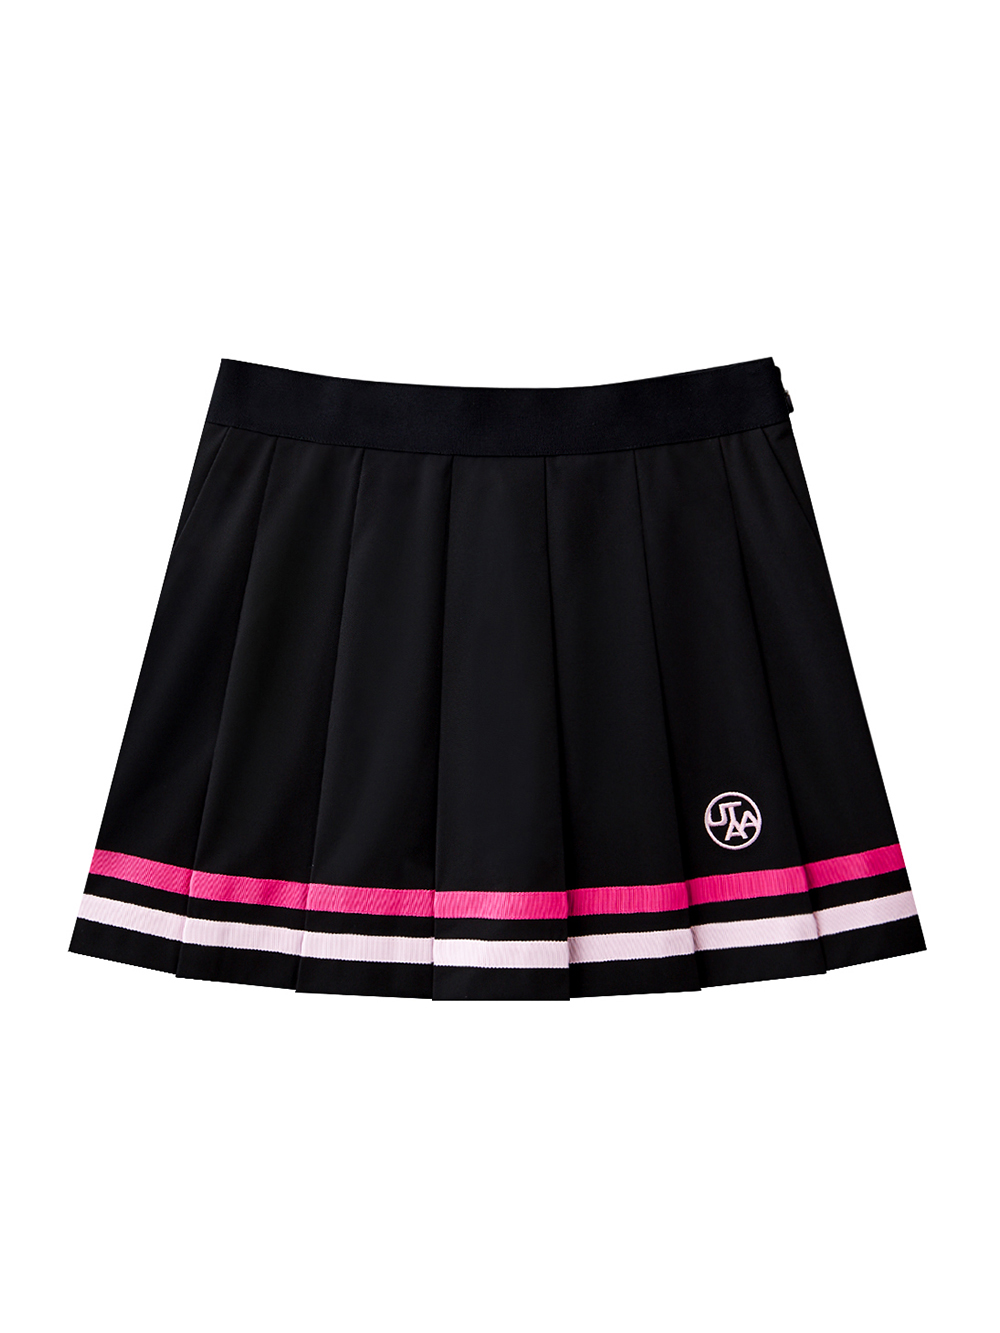 UTAA Dual Tape Mix Flare Skirt  : Black (UD2SKF171BK)